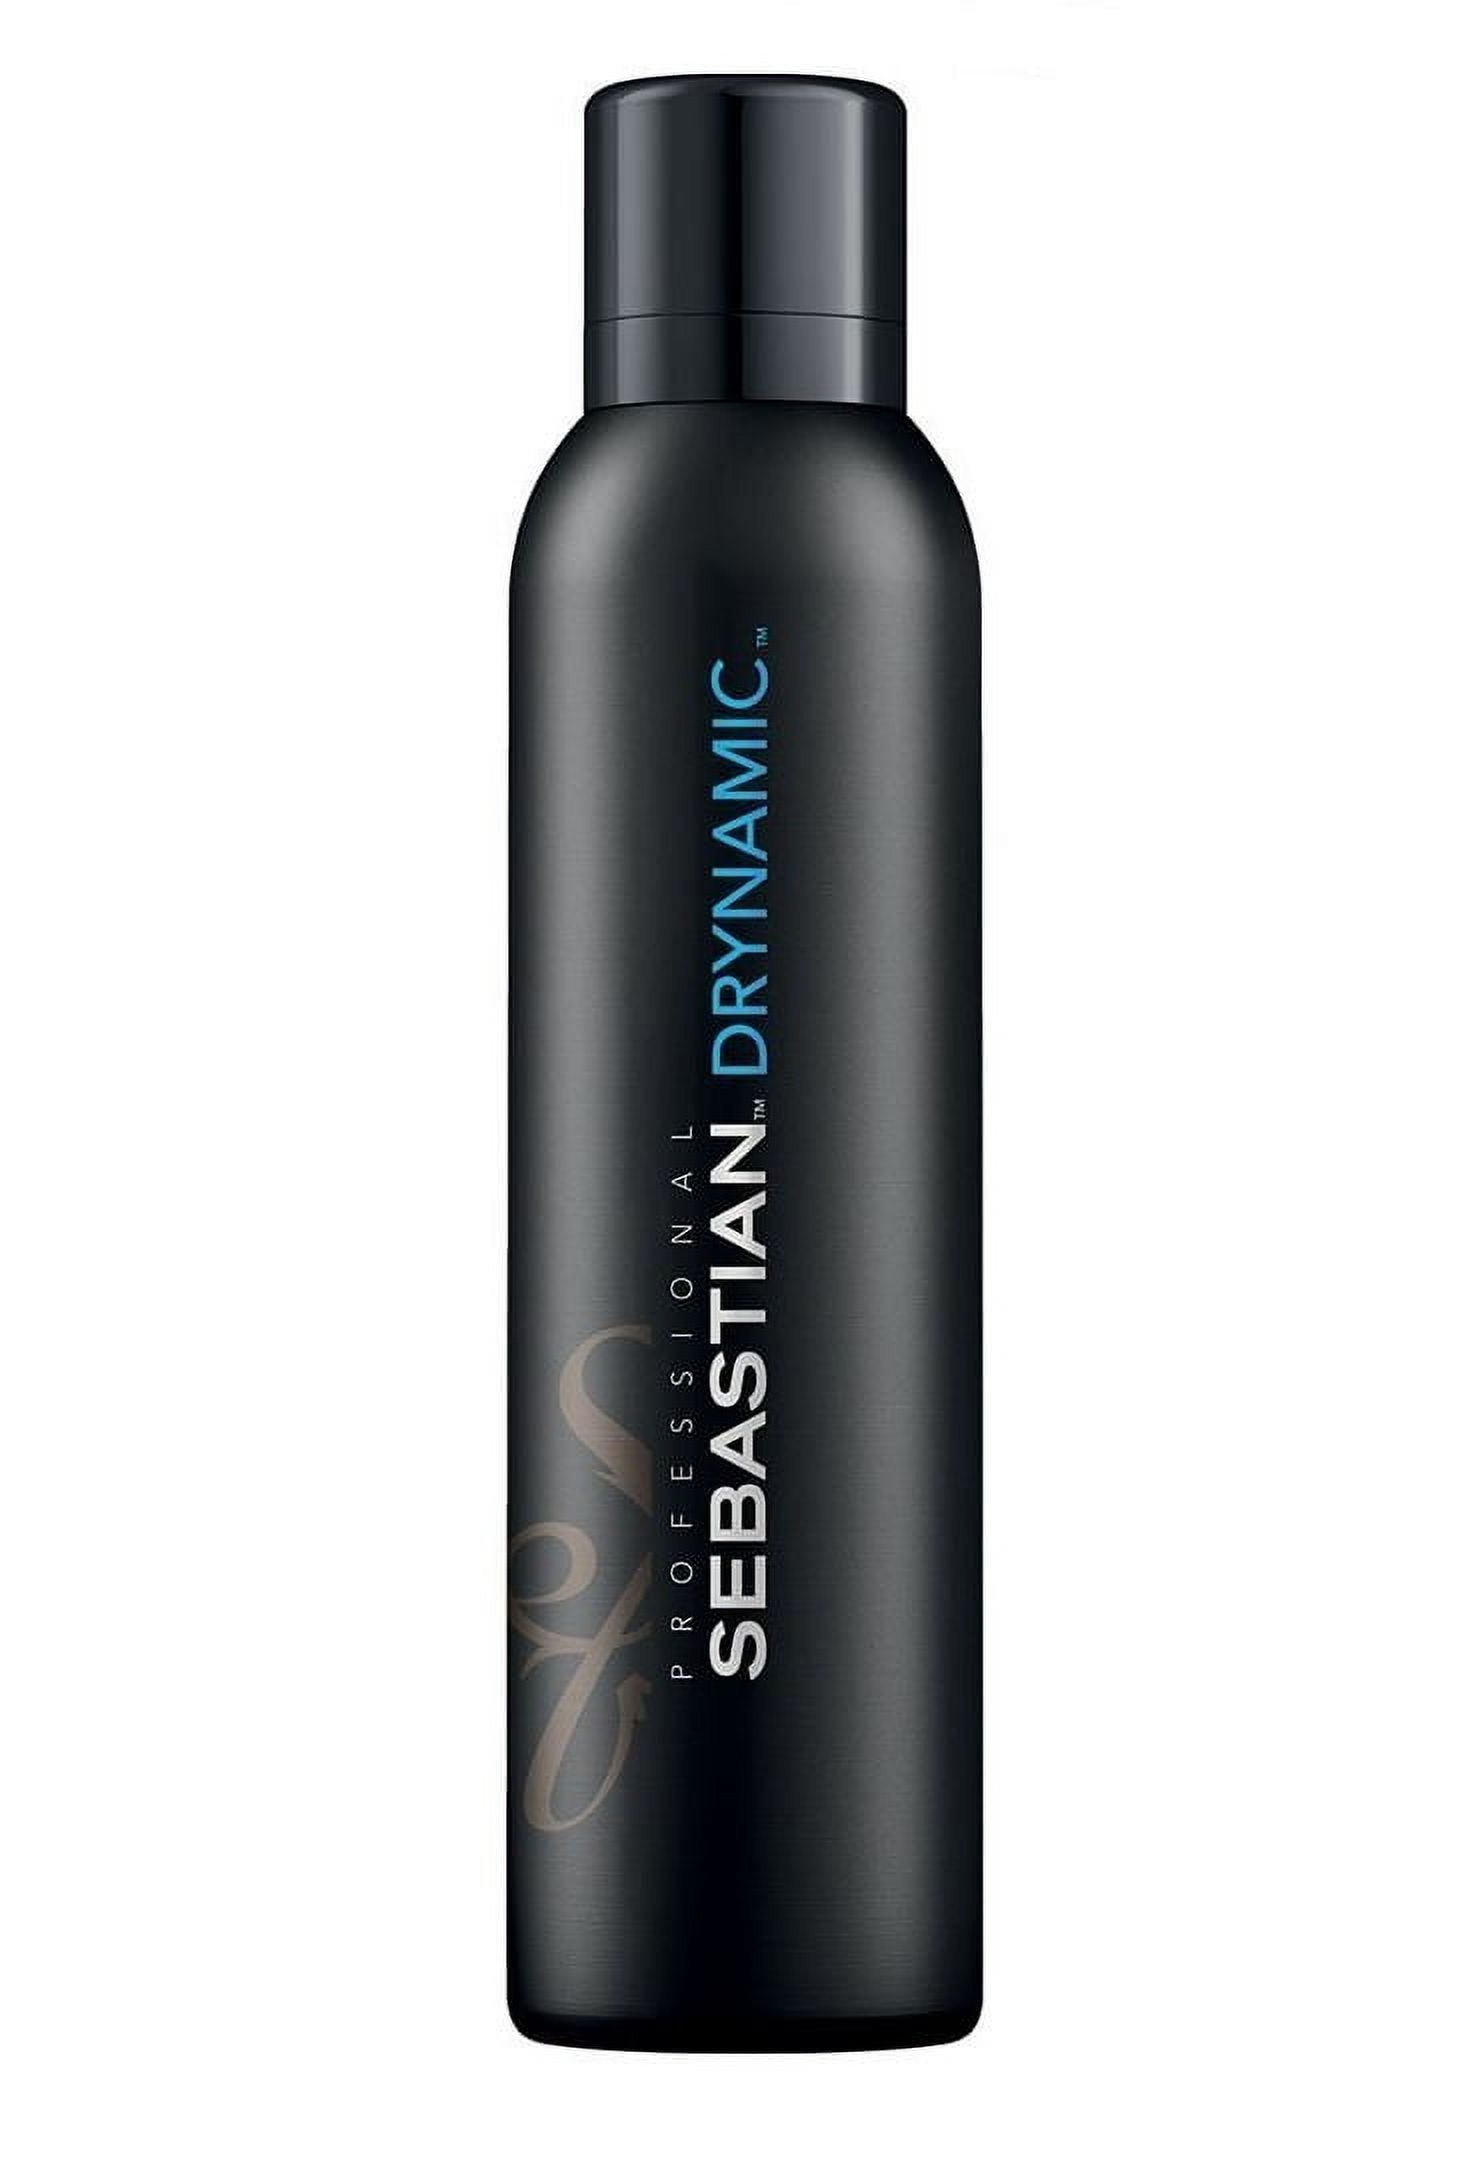 Sebastian Drynamic Dry Shampoo 7.2 oz - image 1 of 2